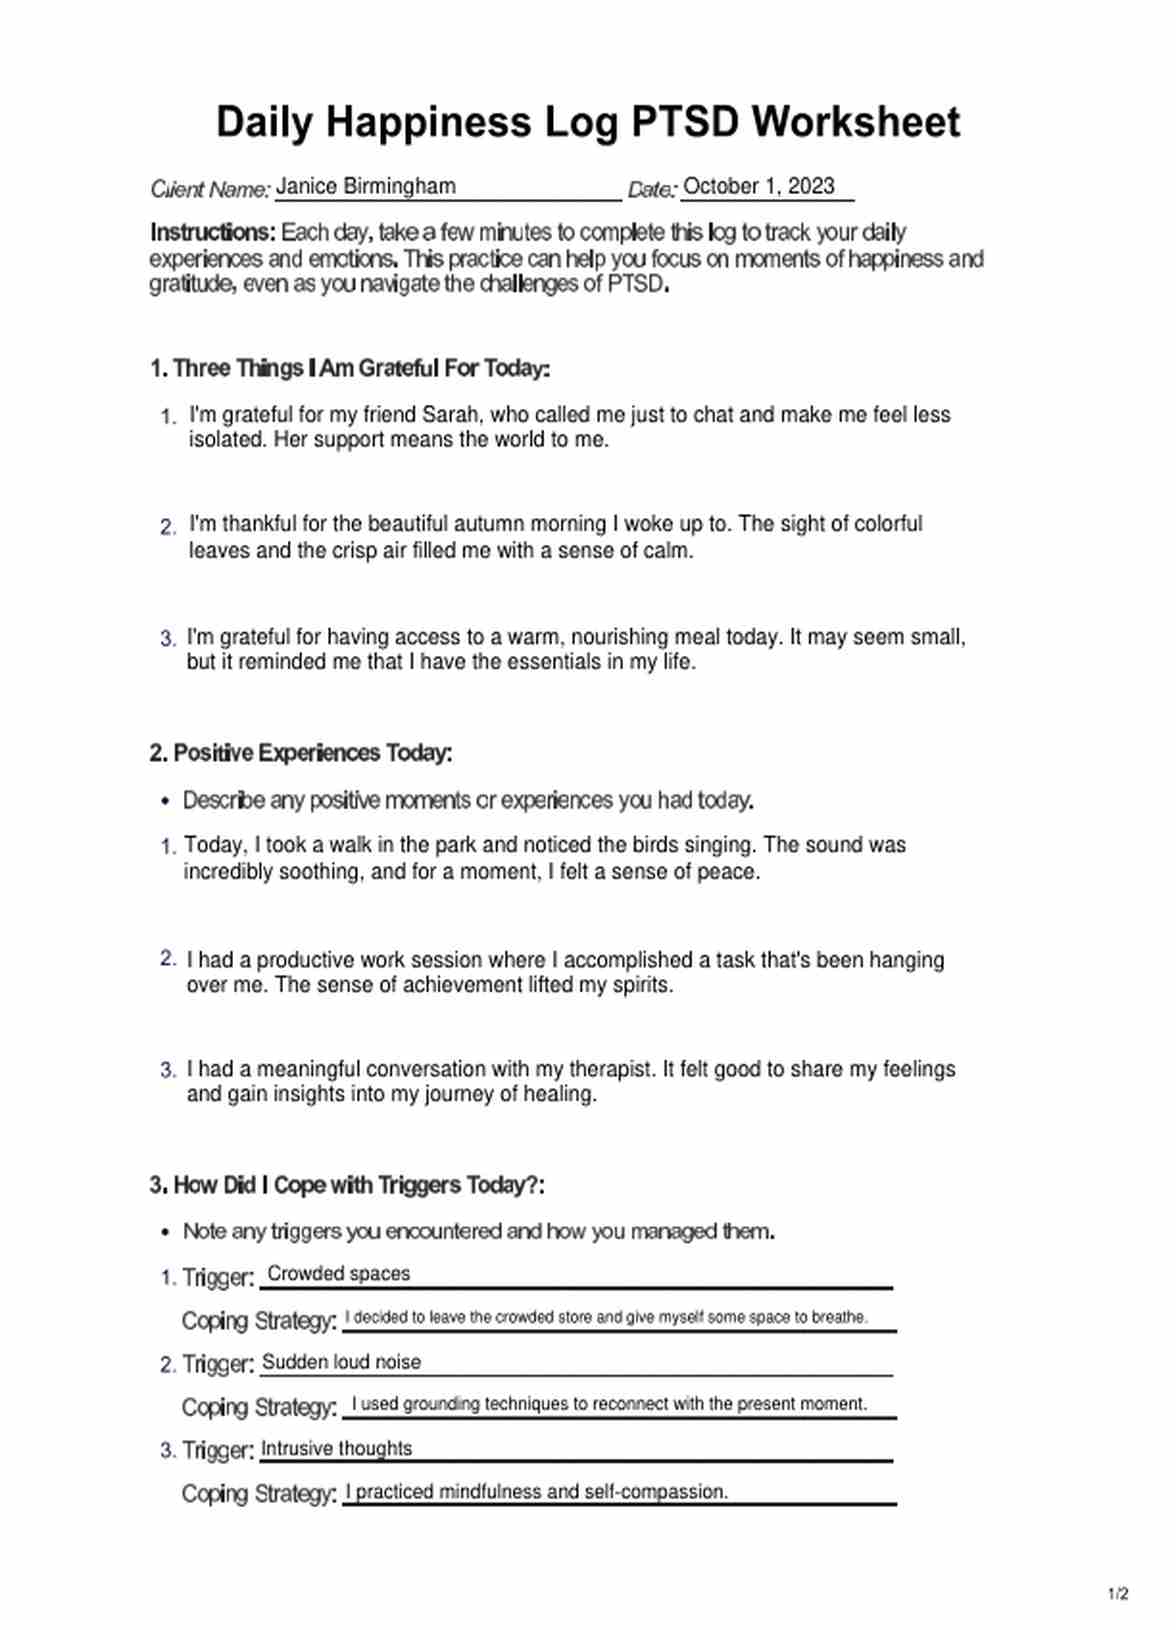 Daily Happiness Log PTSD Worksheet PDF Example